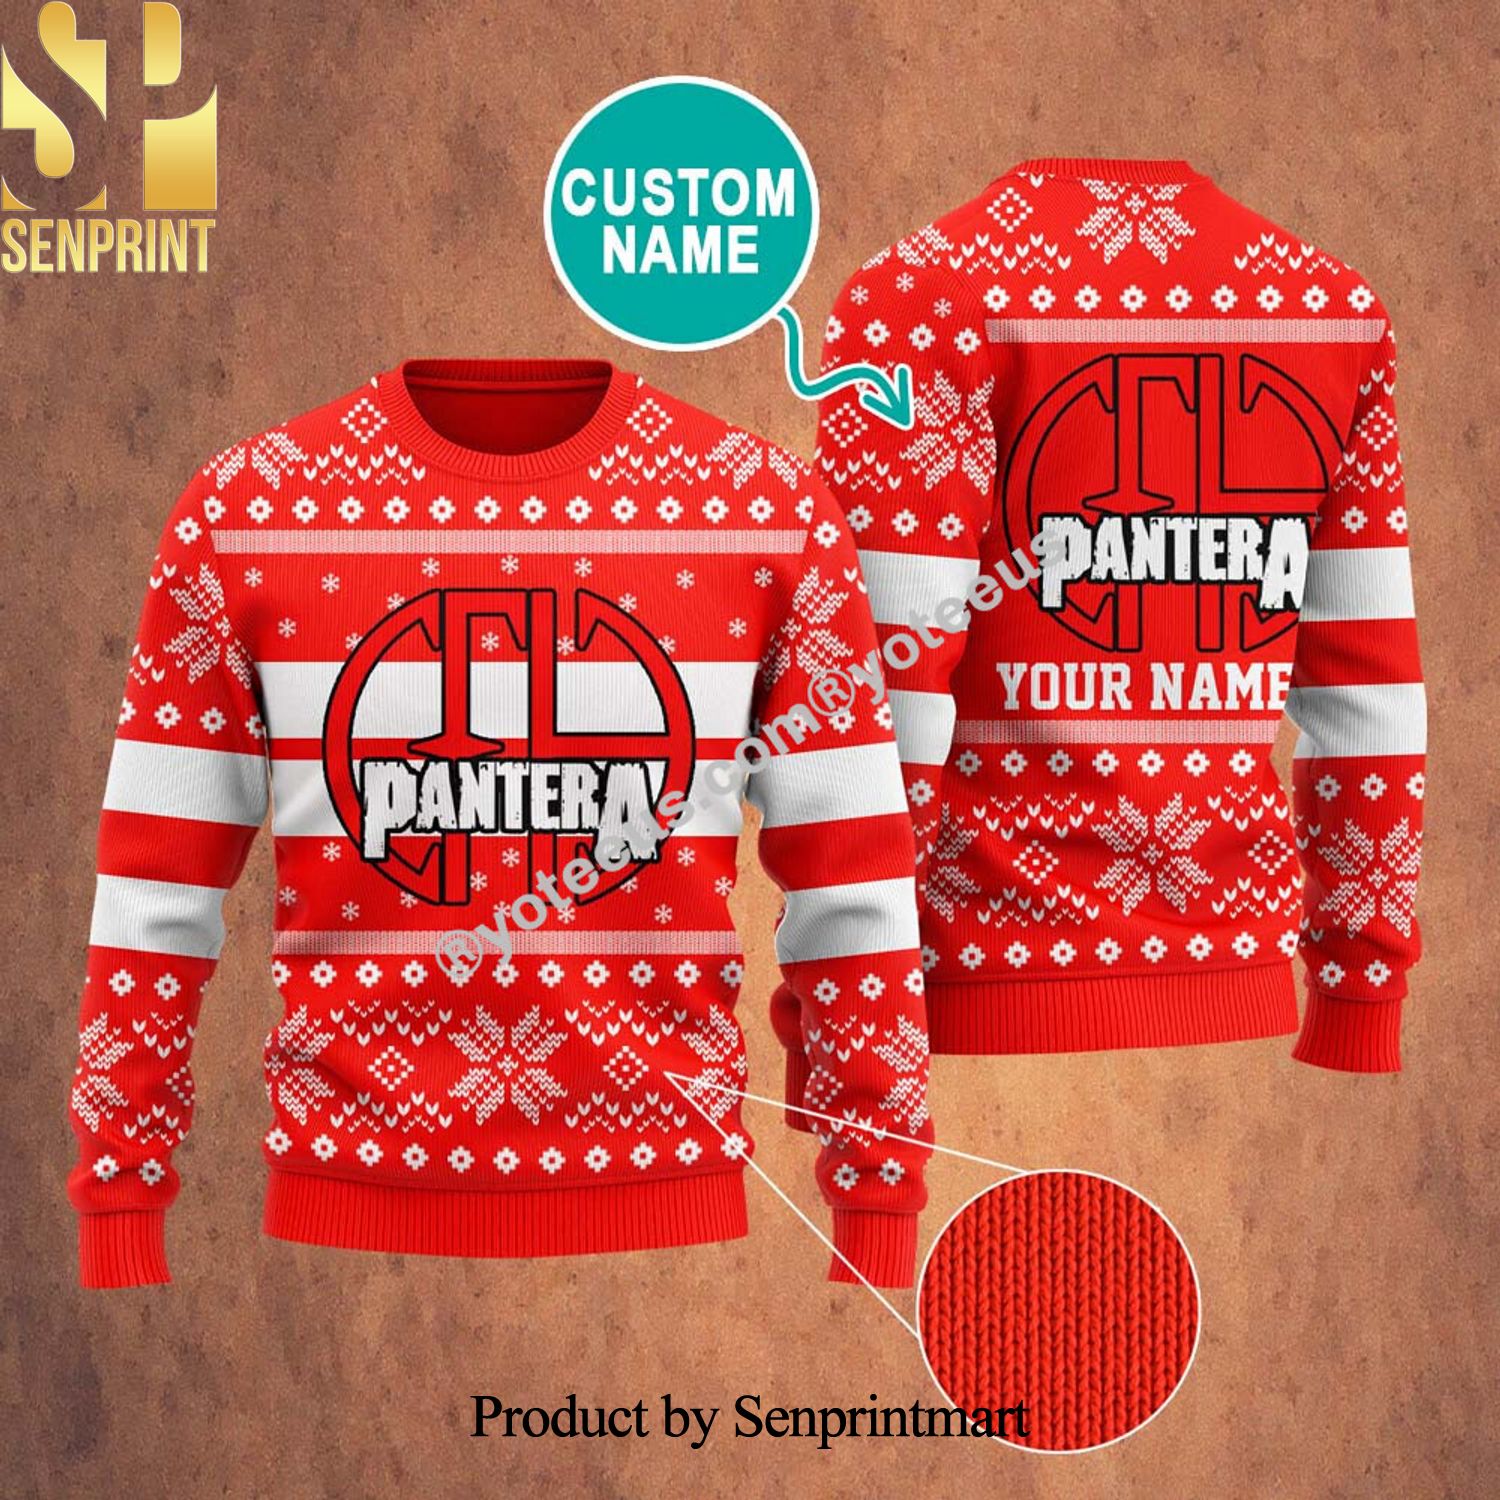 Pantera Ugly Christmas Holiday Sweater